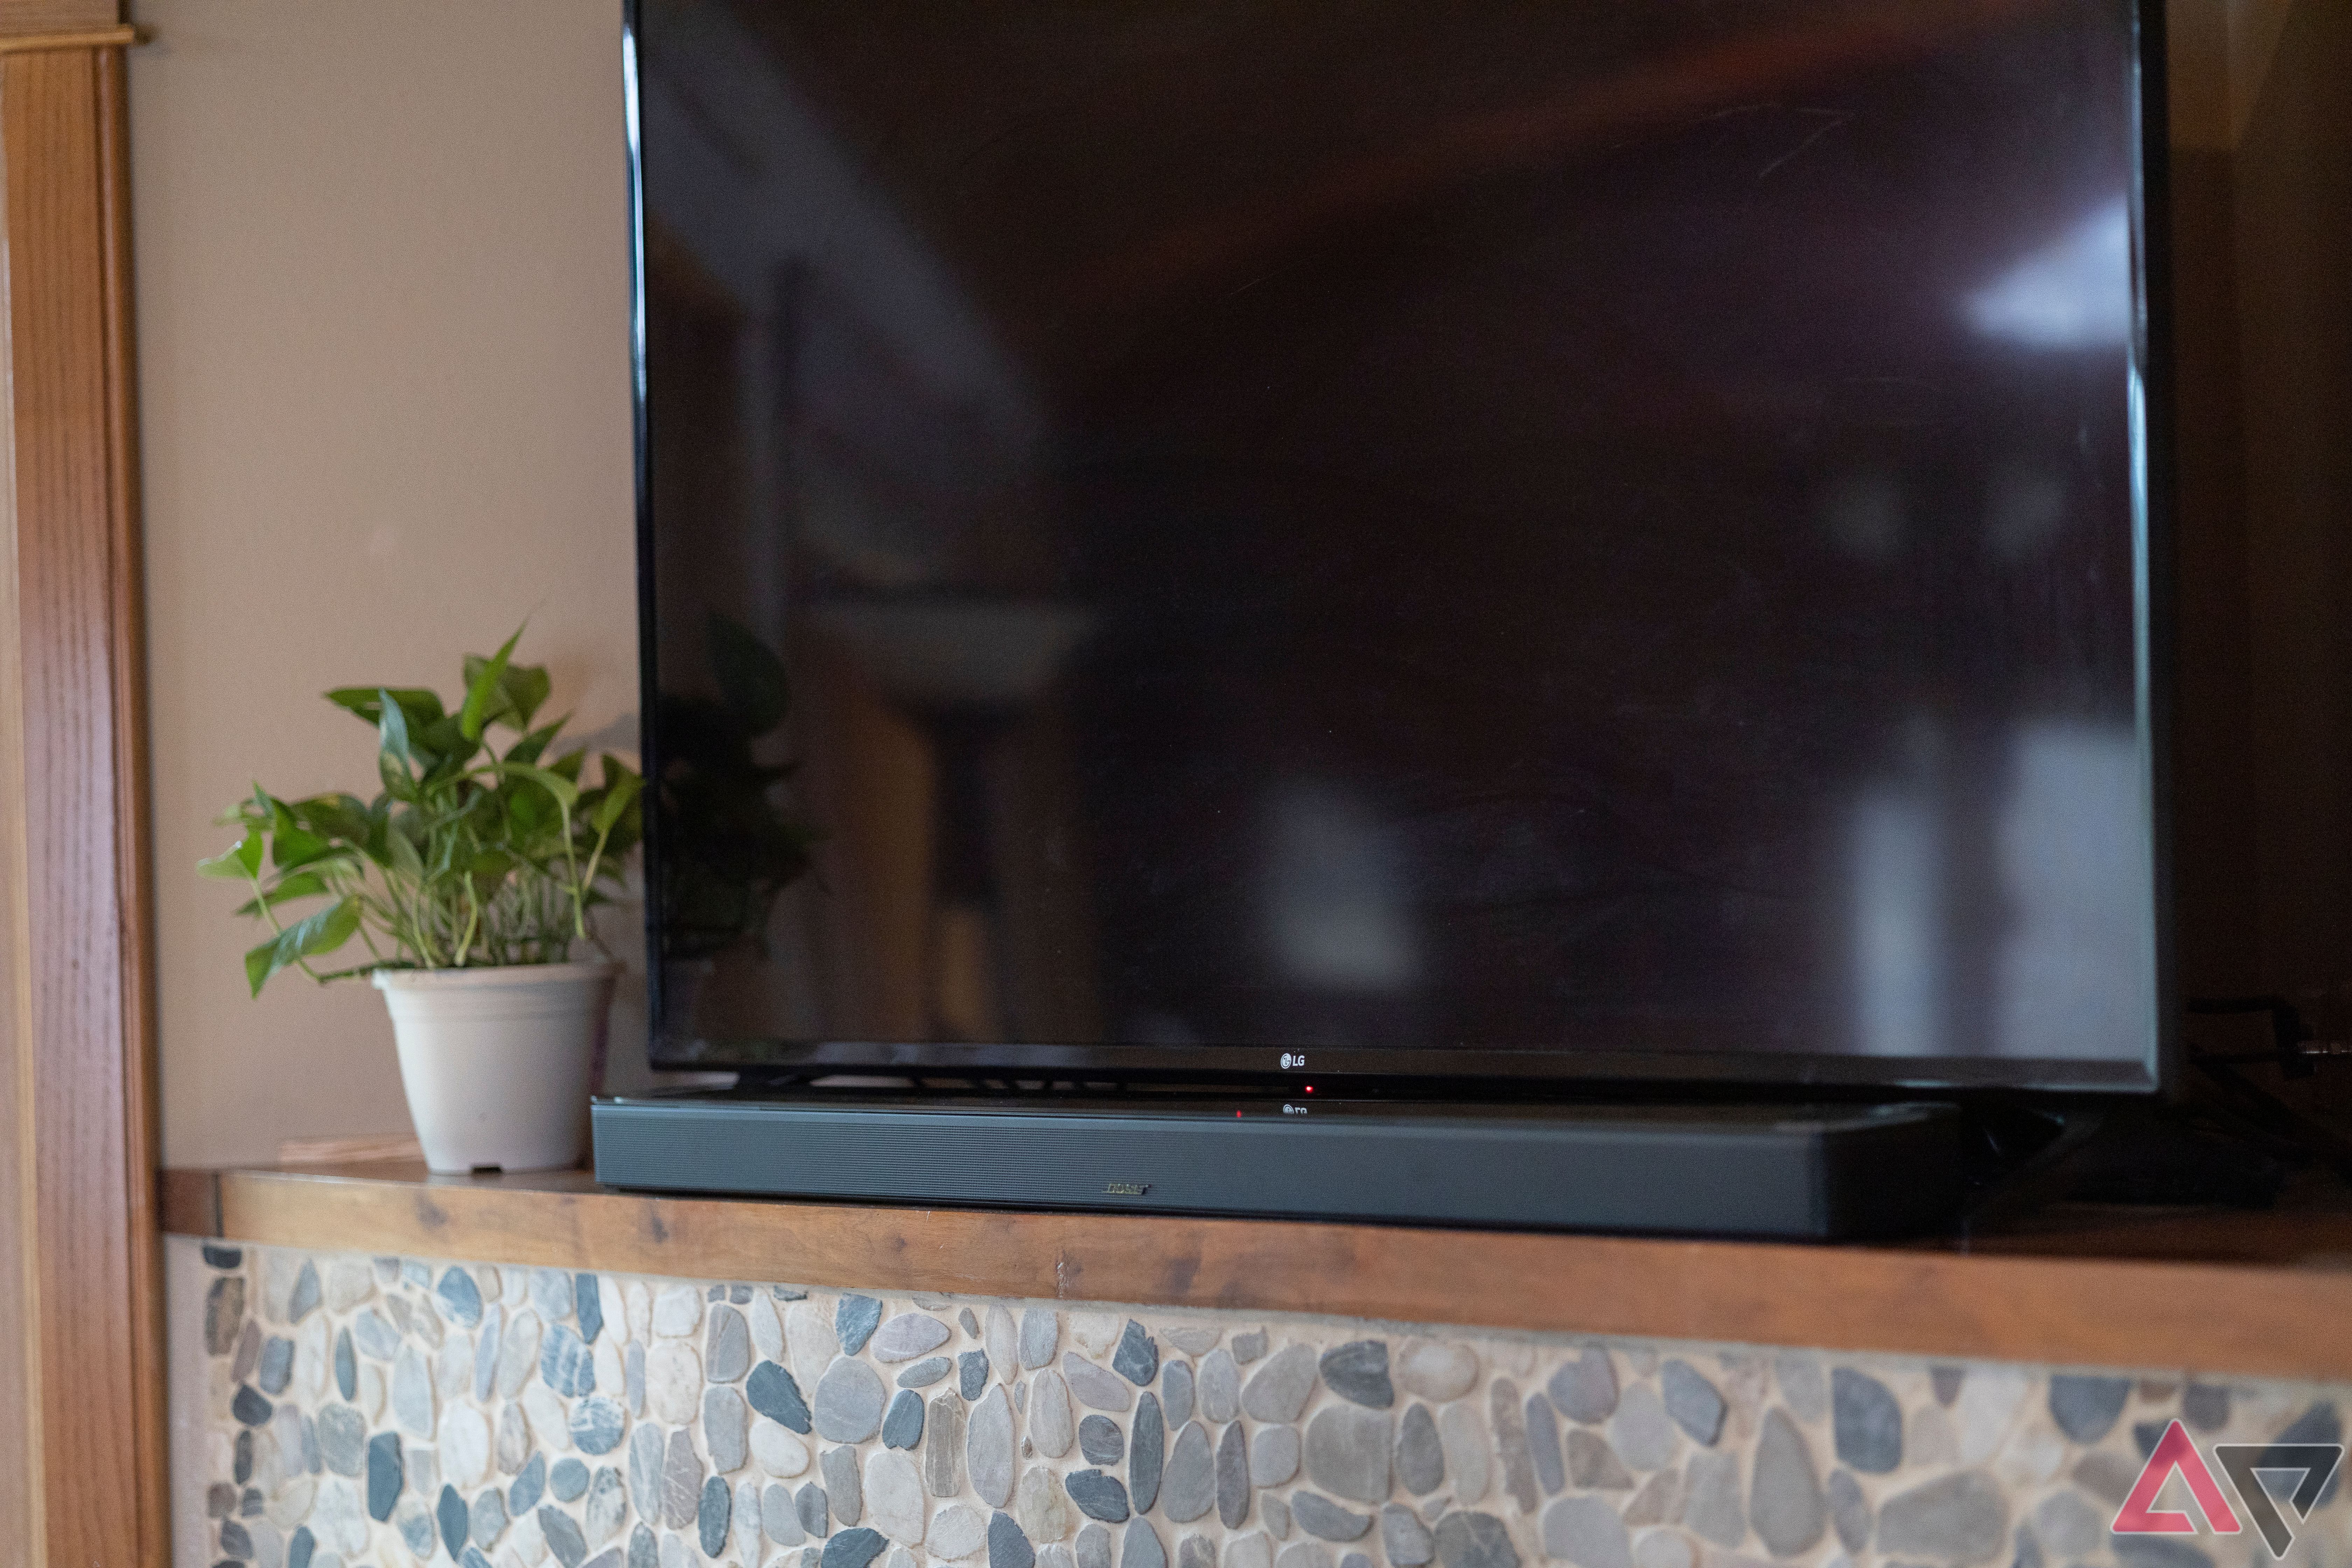 Bose Smart Ultra Soundbar on mantle next to plant and TV